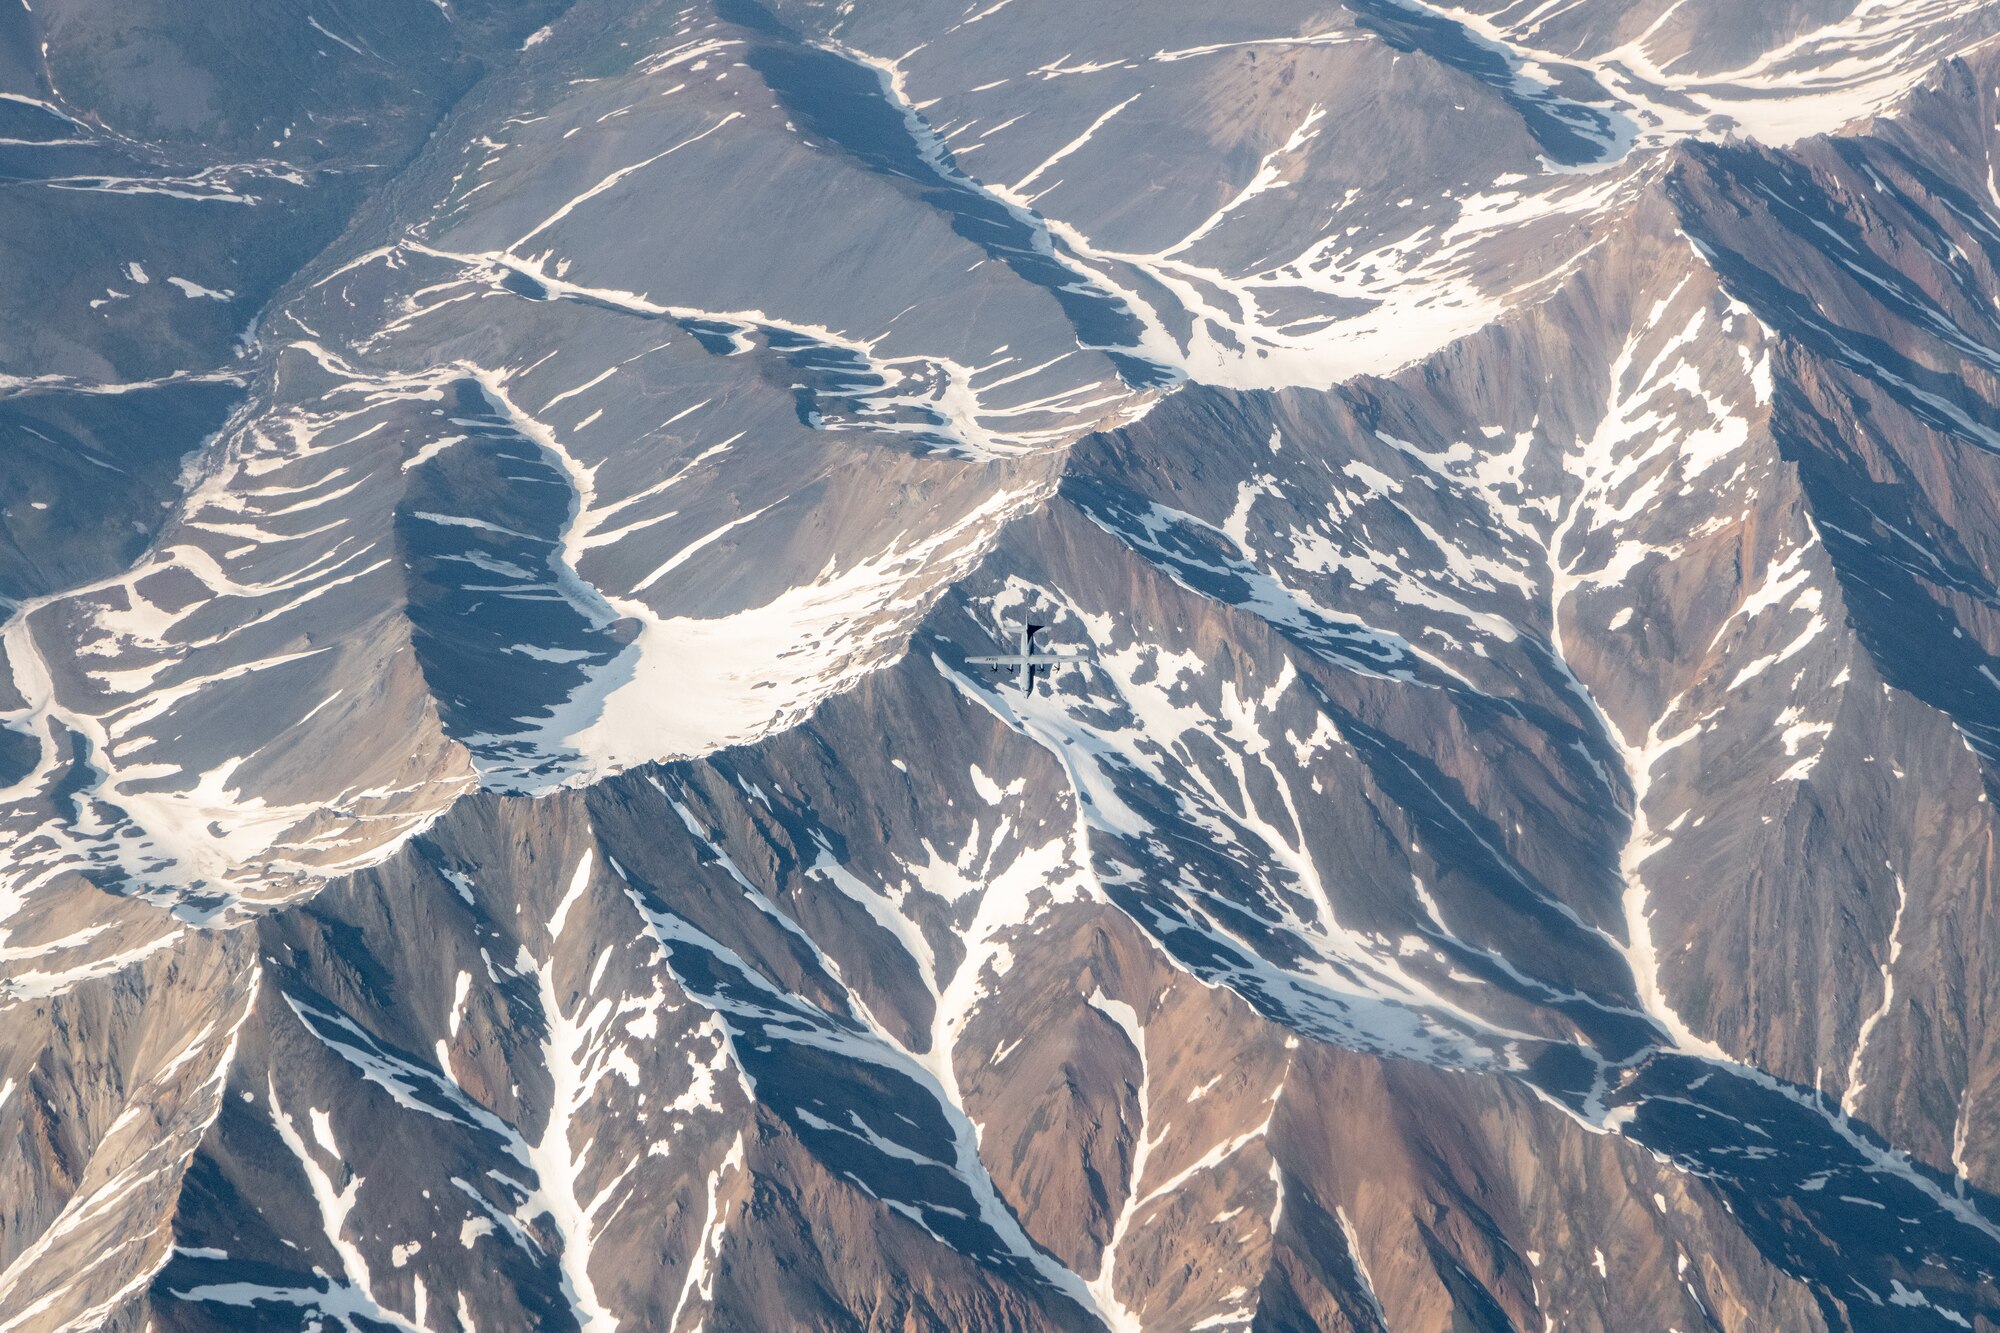 A C-130 flies above a mountain range.